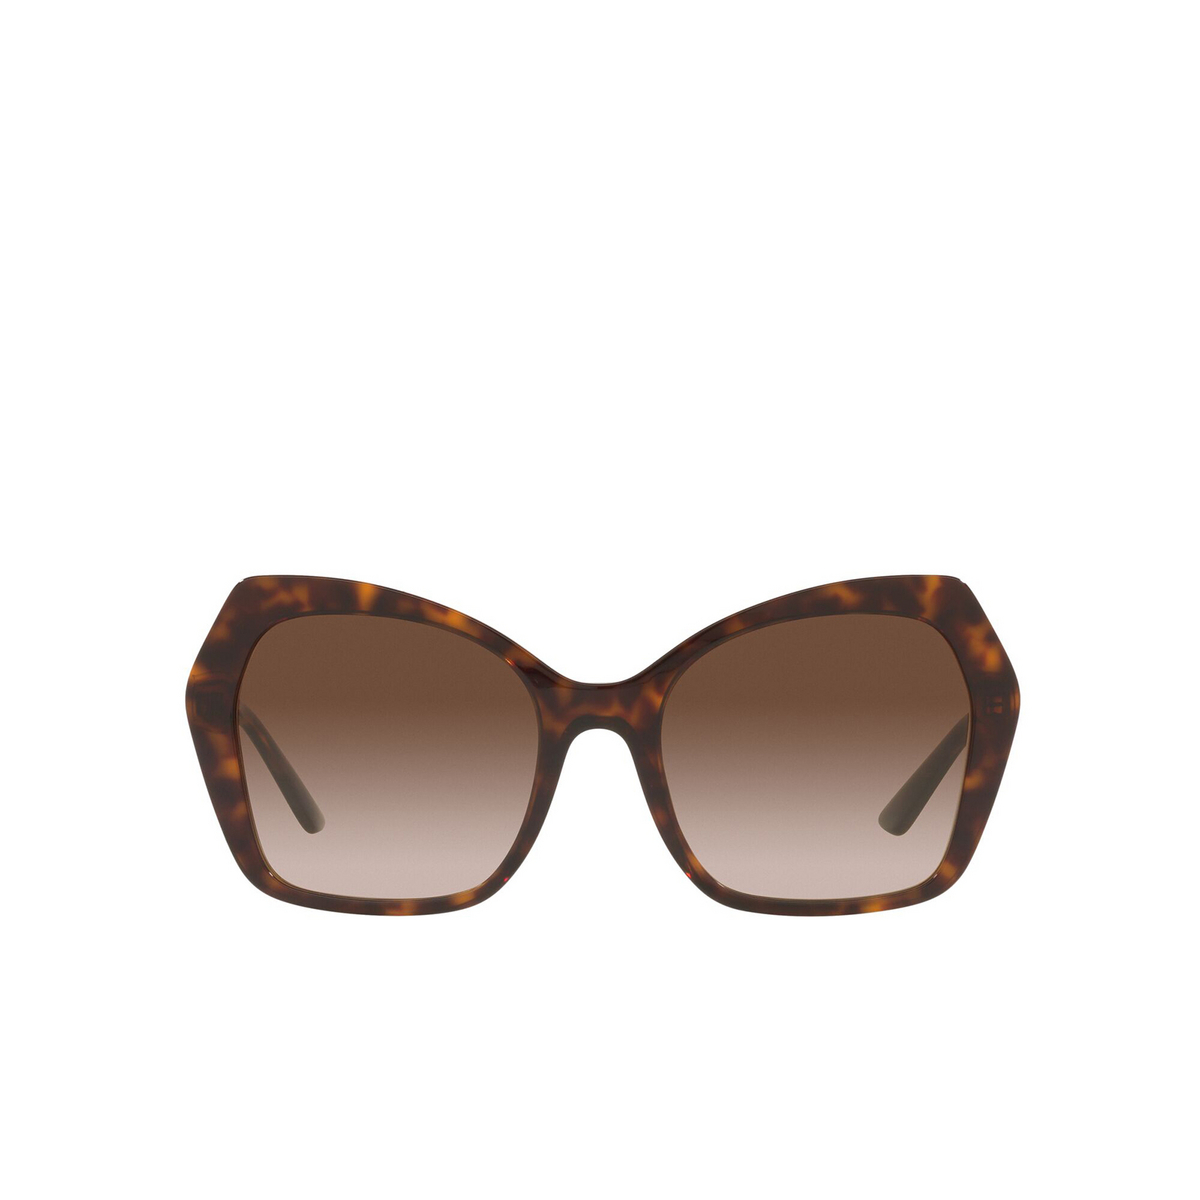 Dolce & Gabbana® Butterfly Sunglasses: DG4399 color Havana 502/13 - front view.